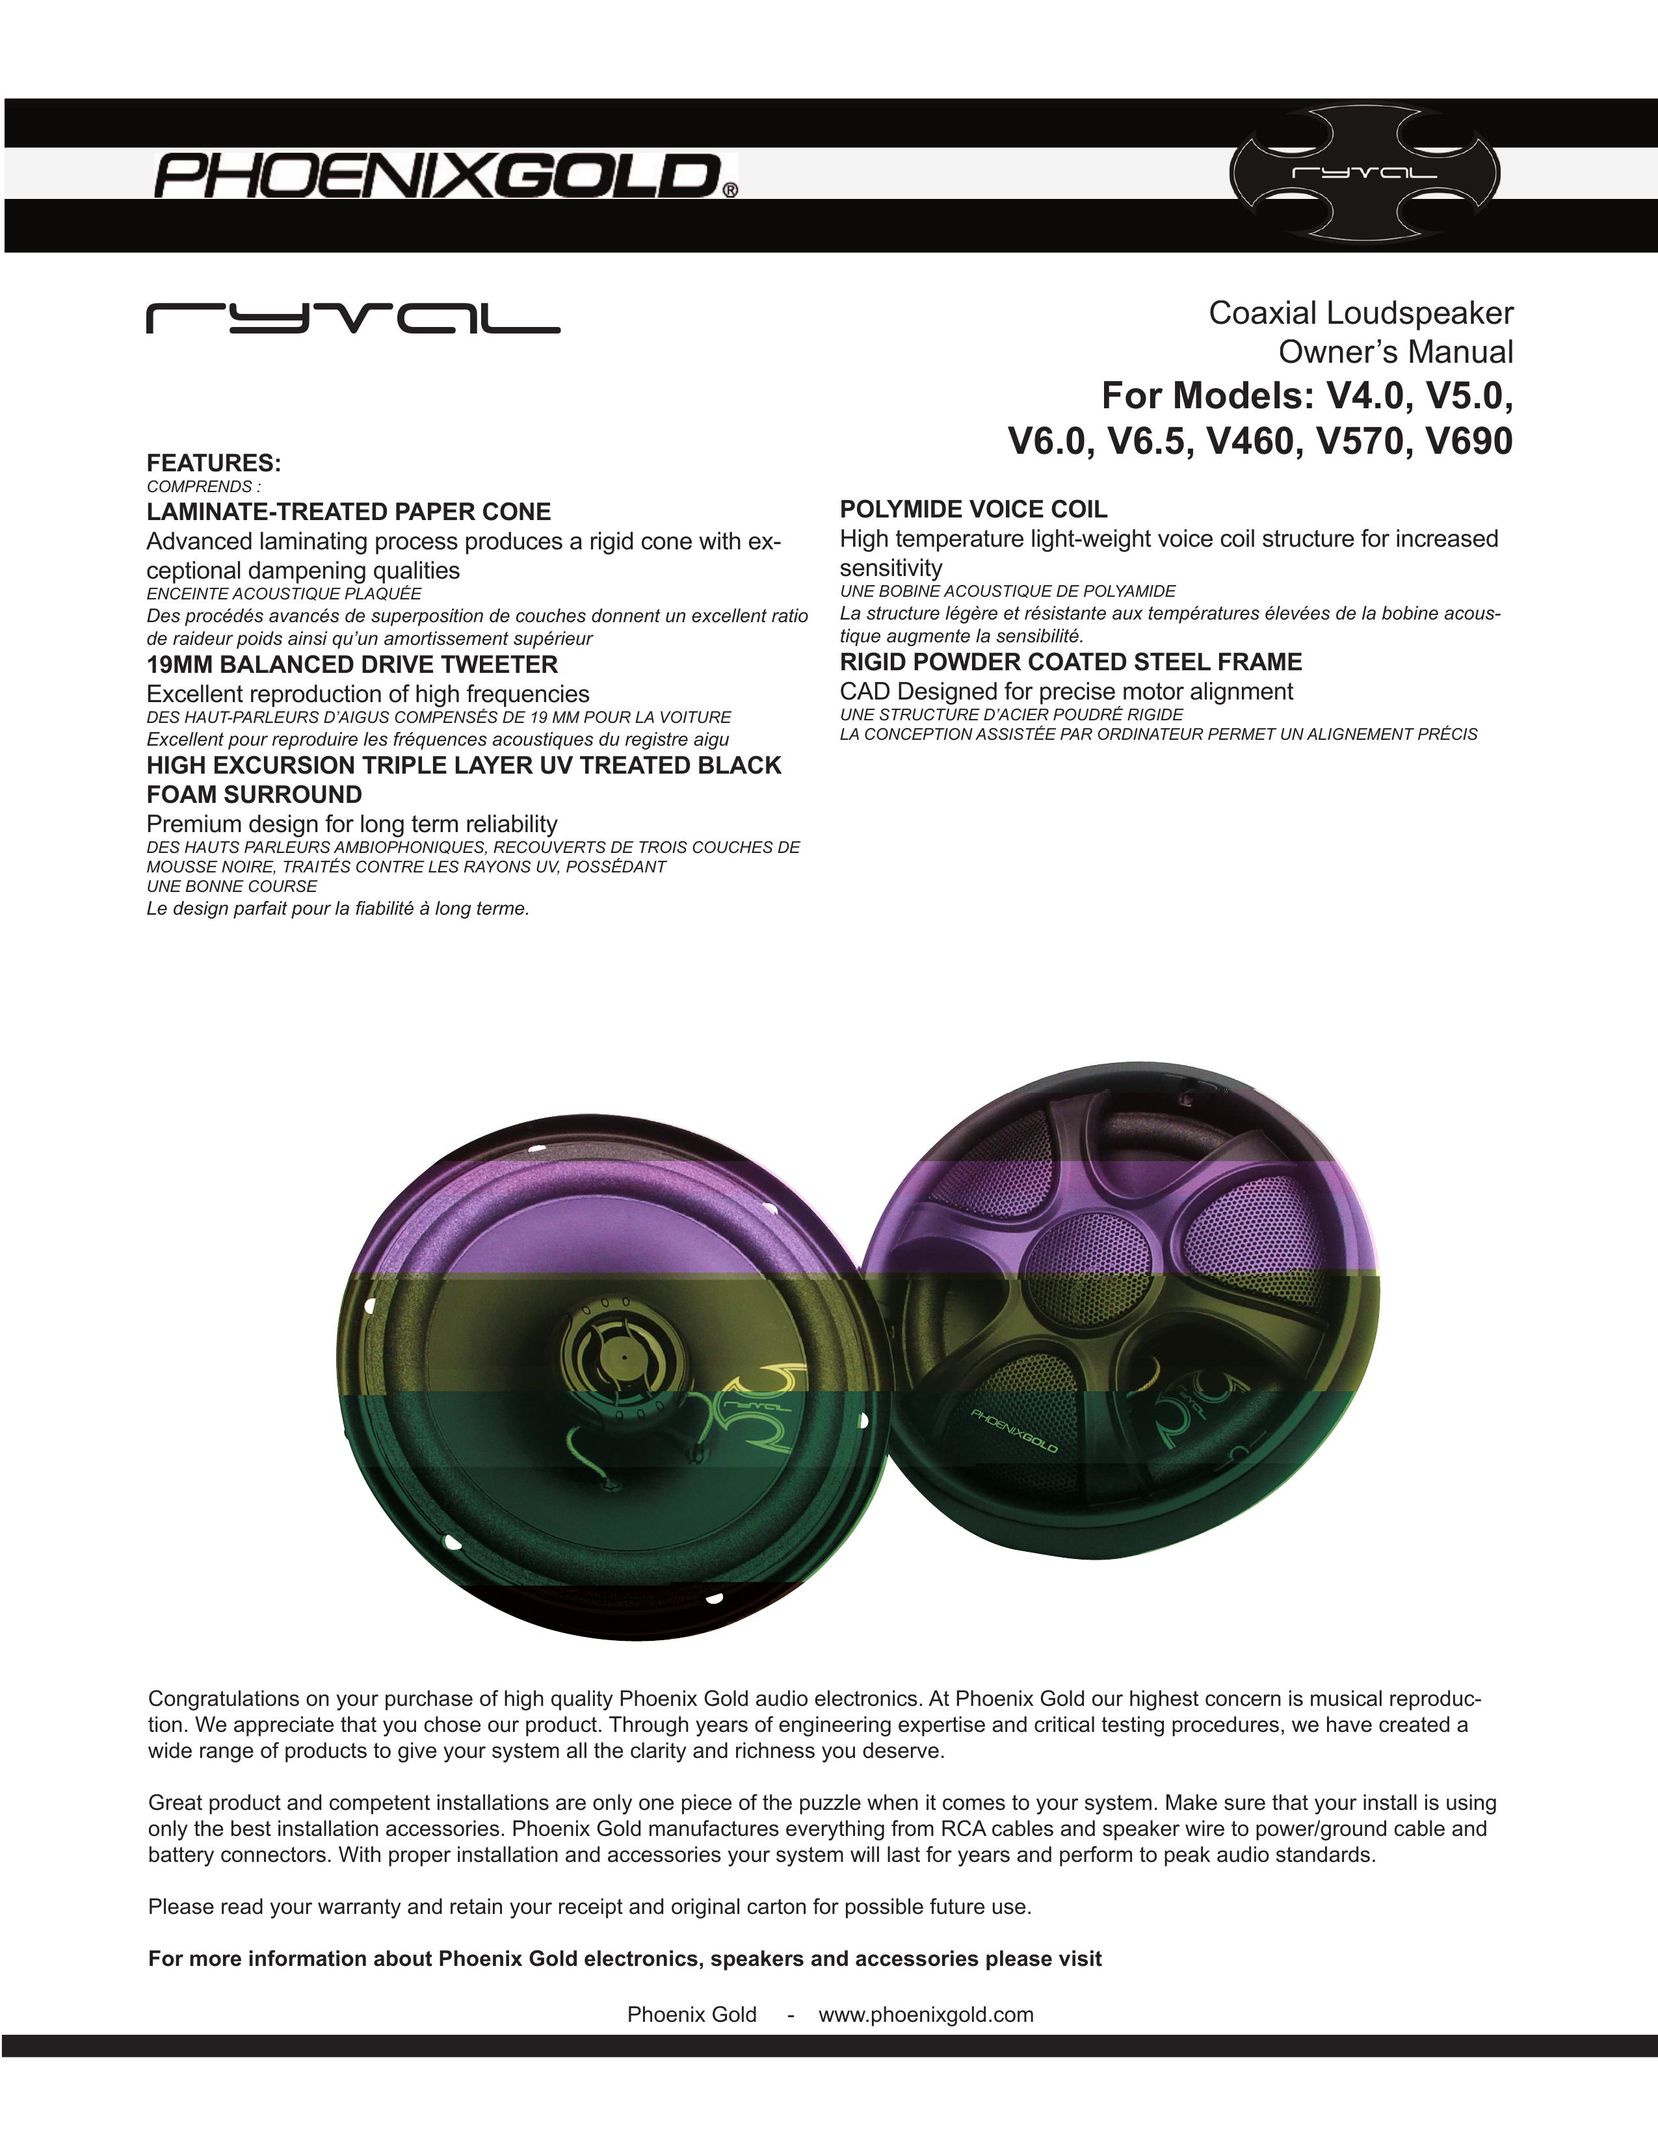 Phoenix Gold V6.0 Car Speaker User Manual